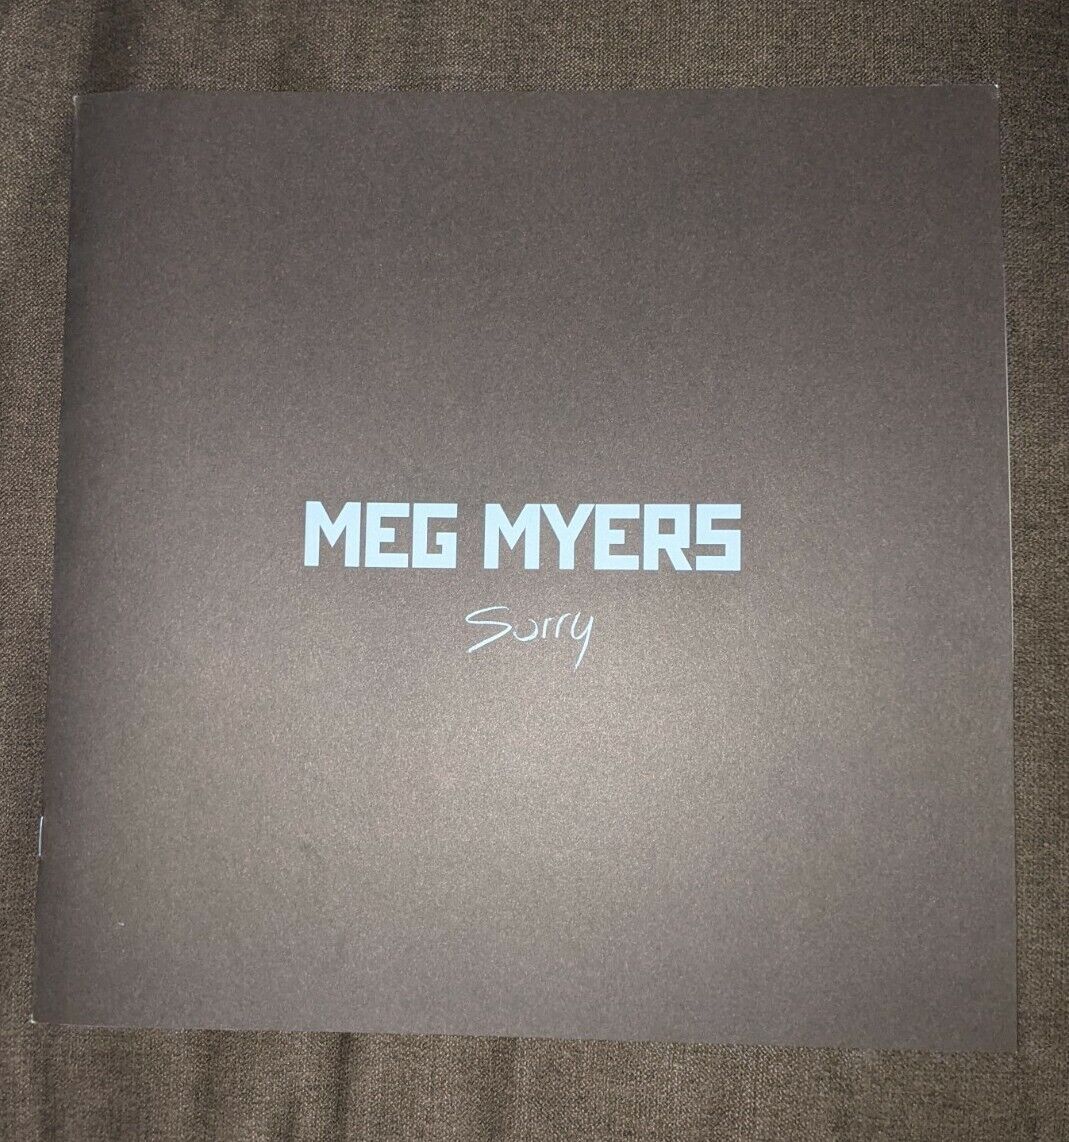 Very Rare Meg Myers Autographed Hand Written Lyrics Sorry Album Limited Edition 